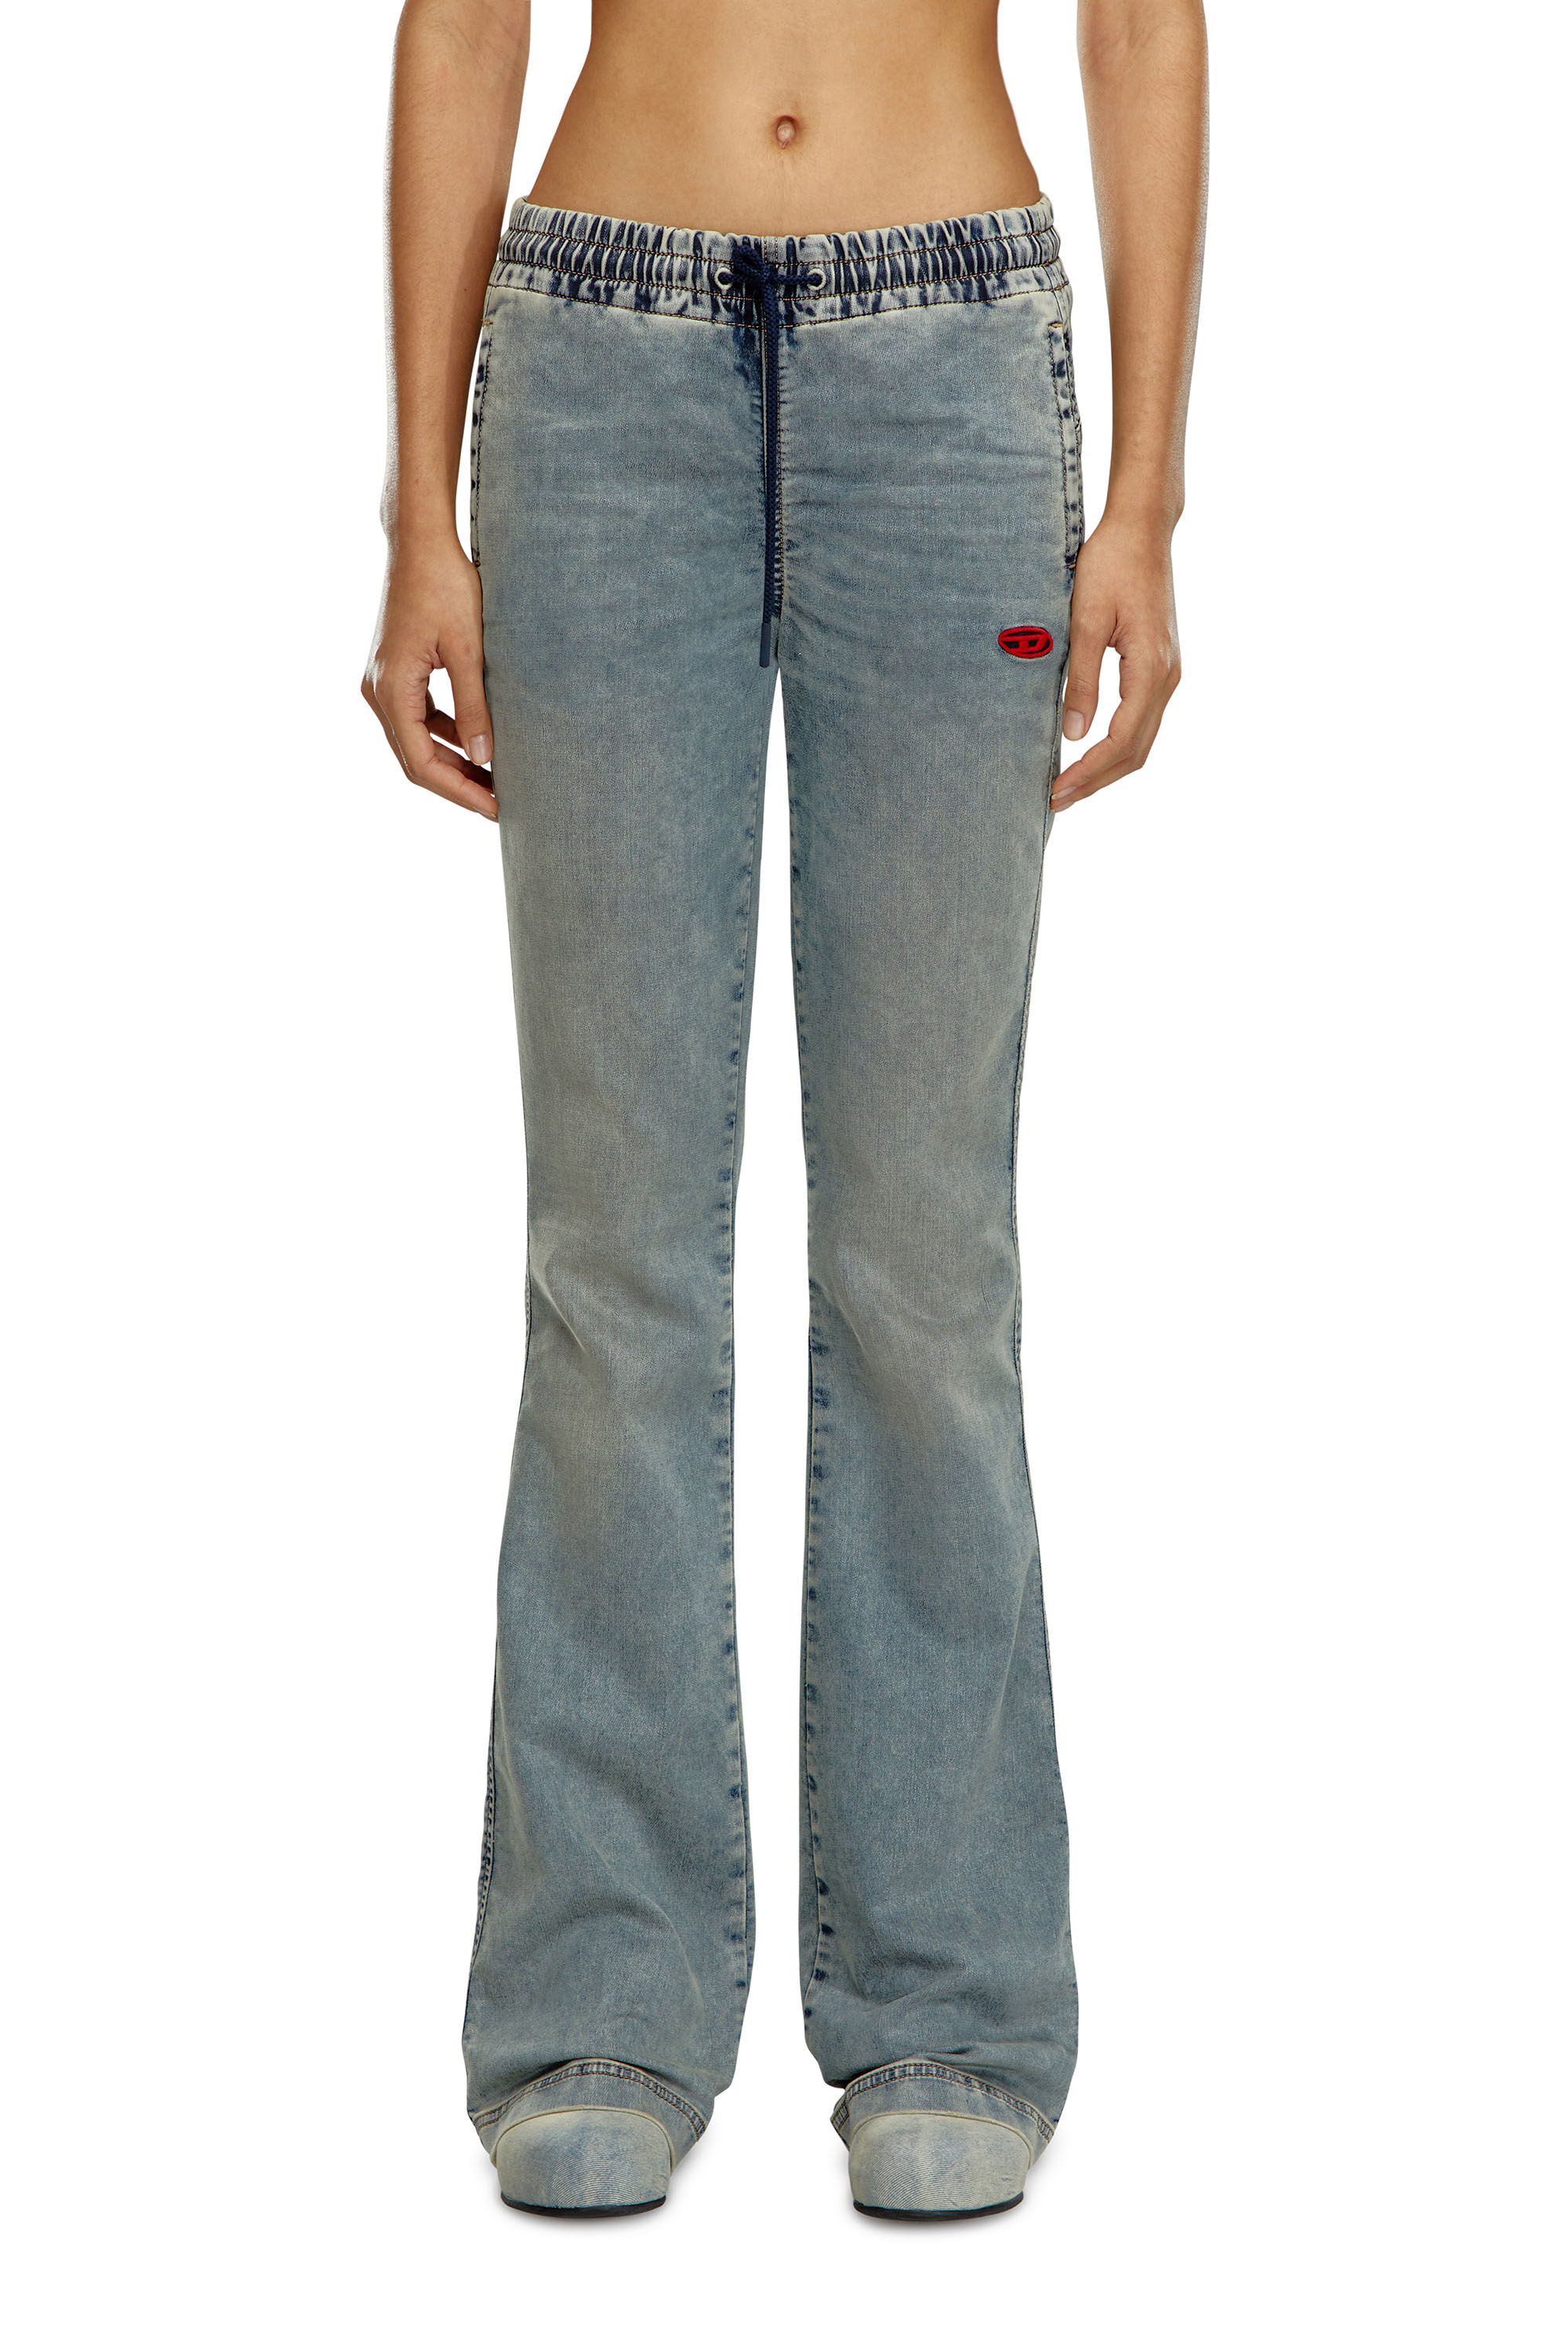 Women's Bootcut and Flare Jeans | Medium blue | Diesel 2069 D-Ebbey ...